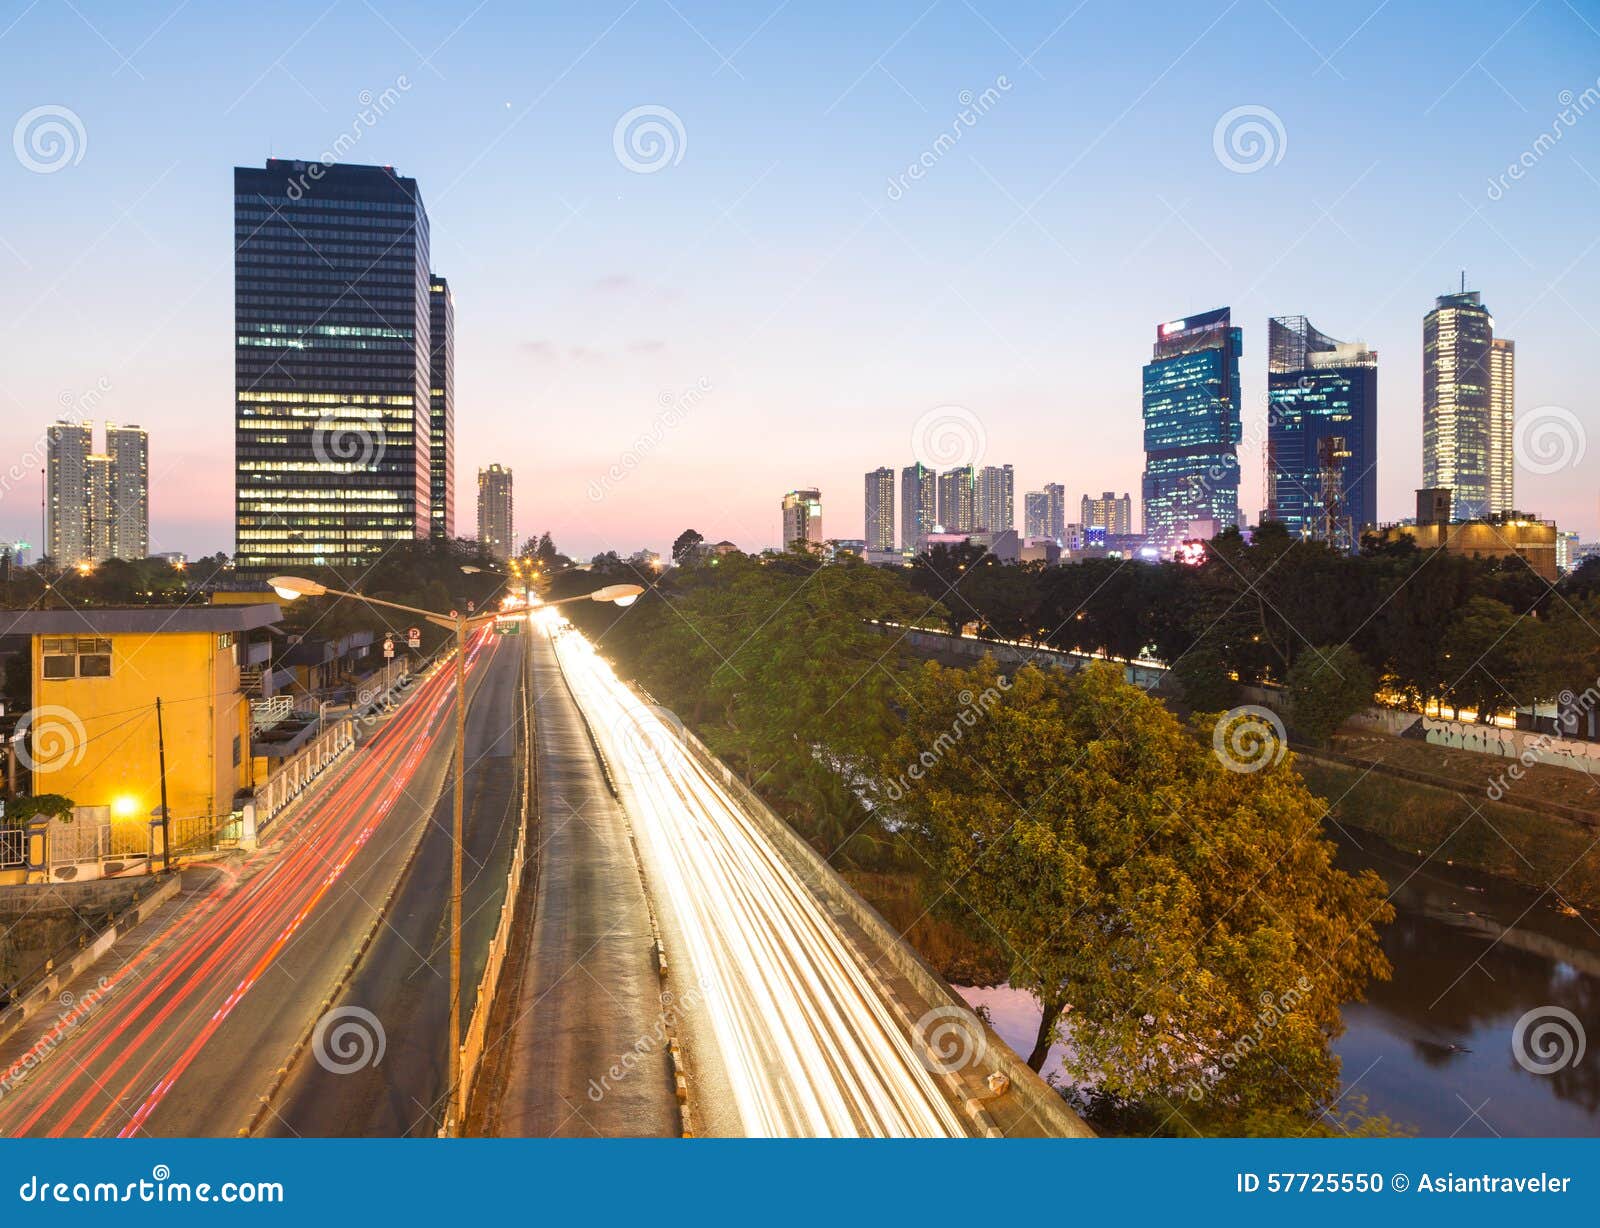 Jakarta sunset rush stock photo. Image of city, downtown - 57725550